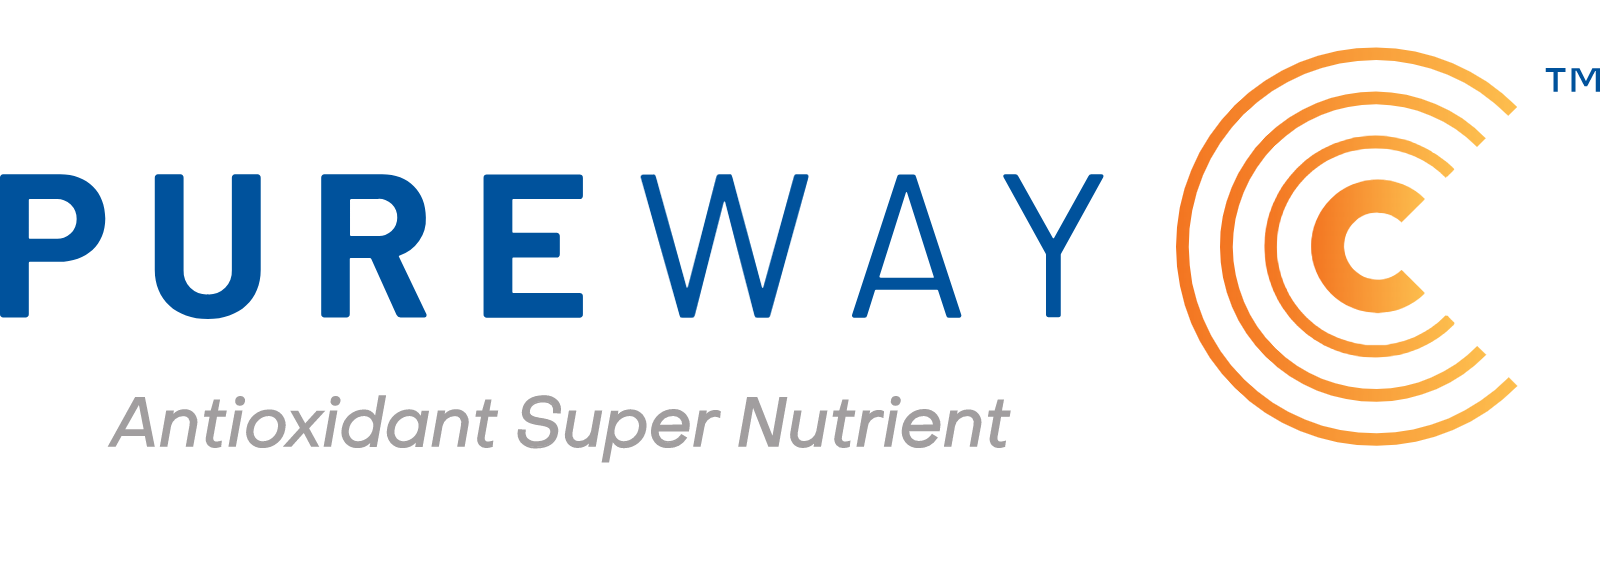 pureway-c logo